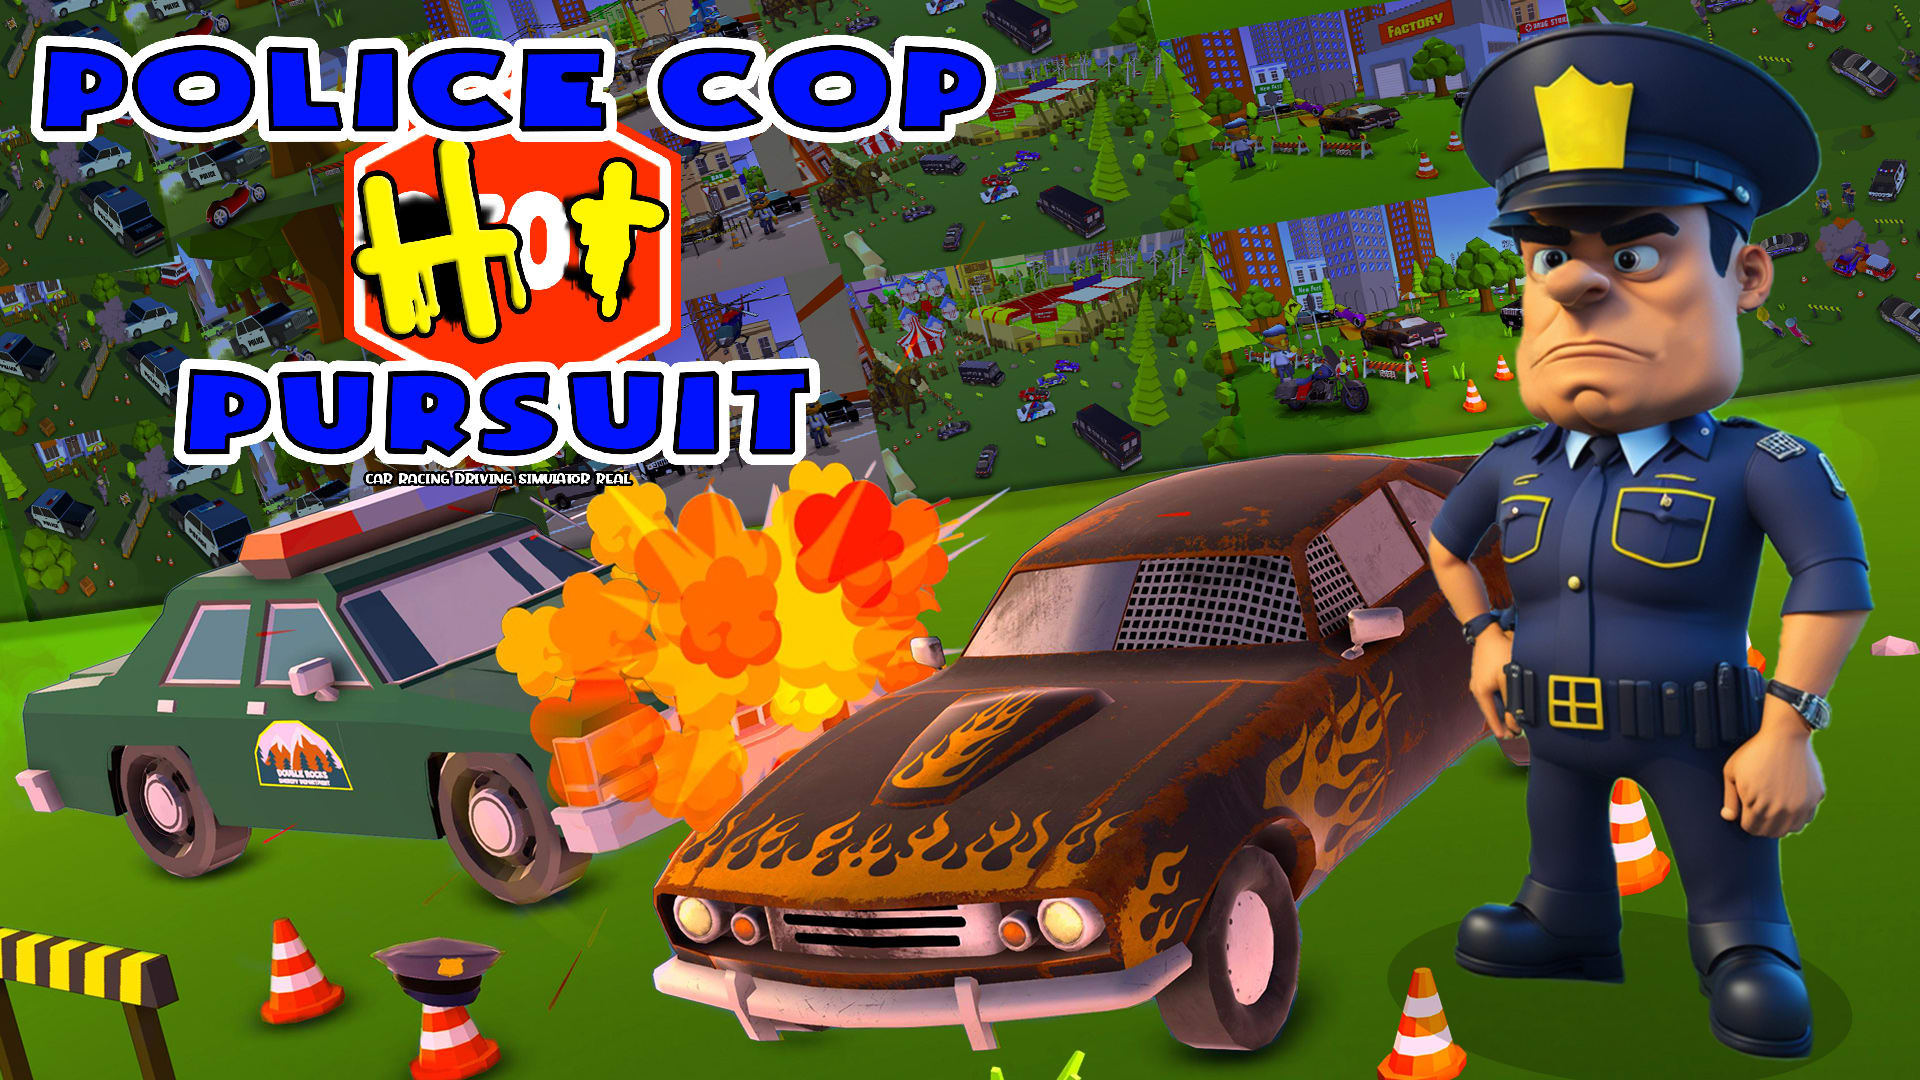 Police Cop Hot Pursuit - Car Racing Driving Simulator Real